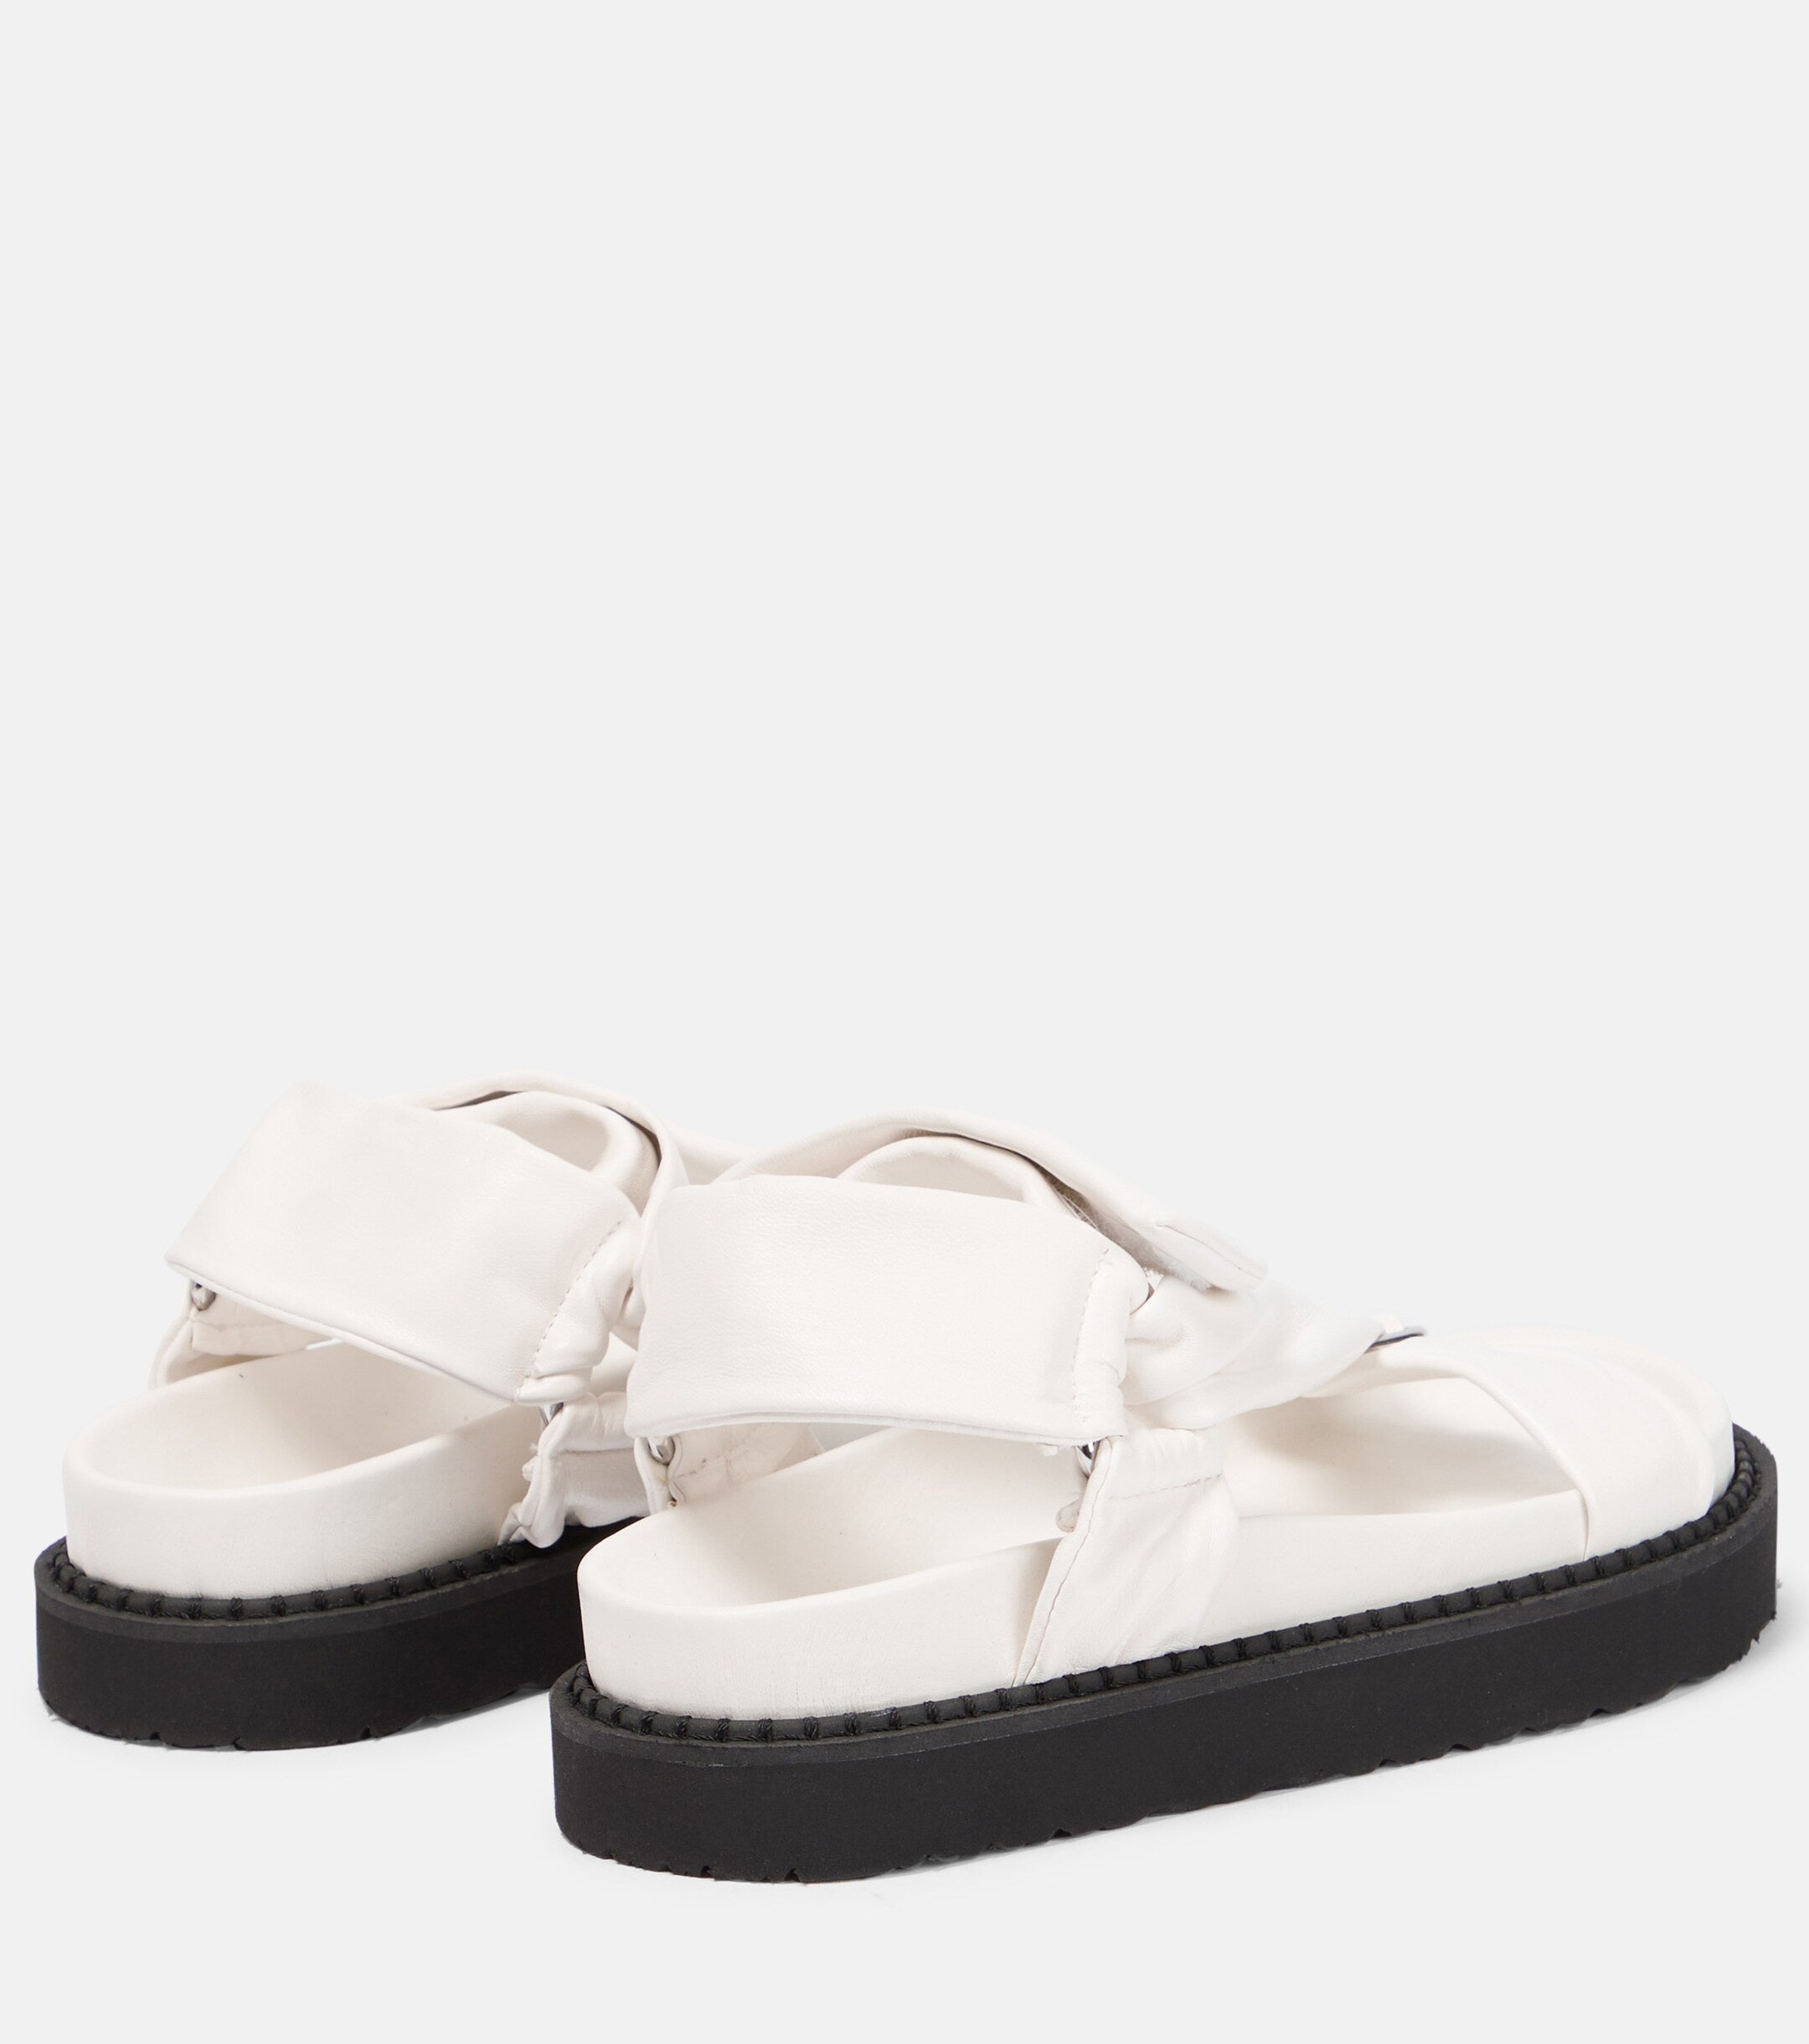 IM Naori Sandals in White